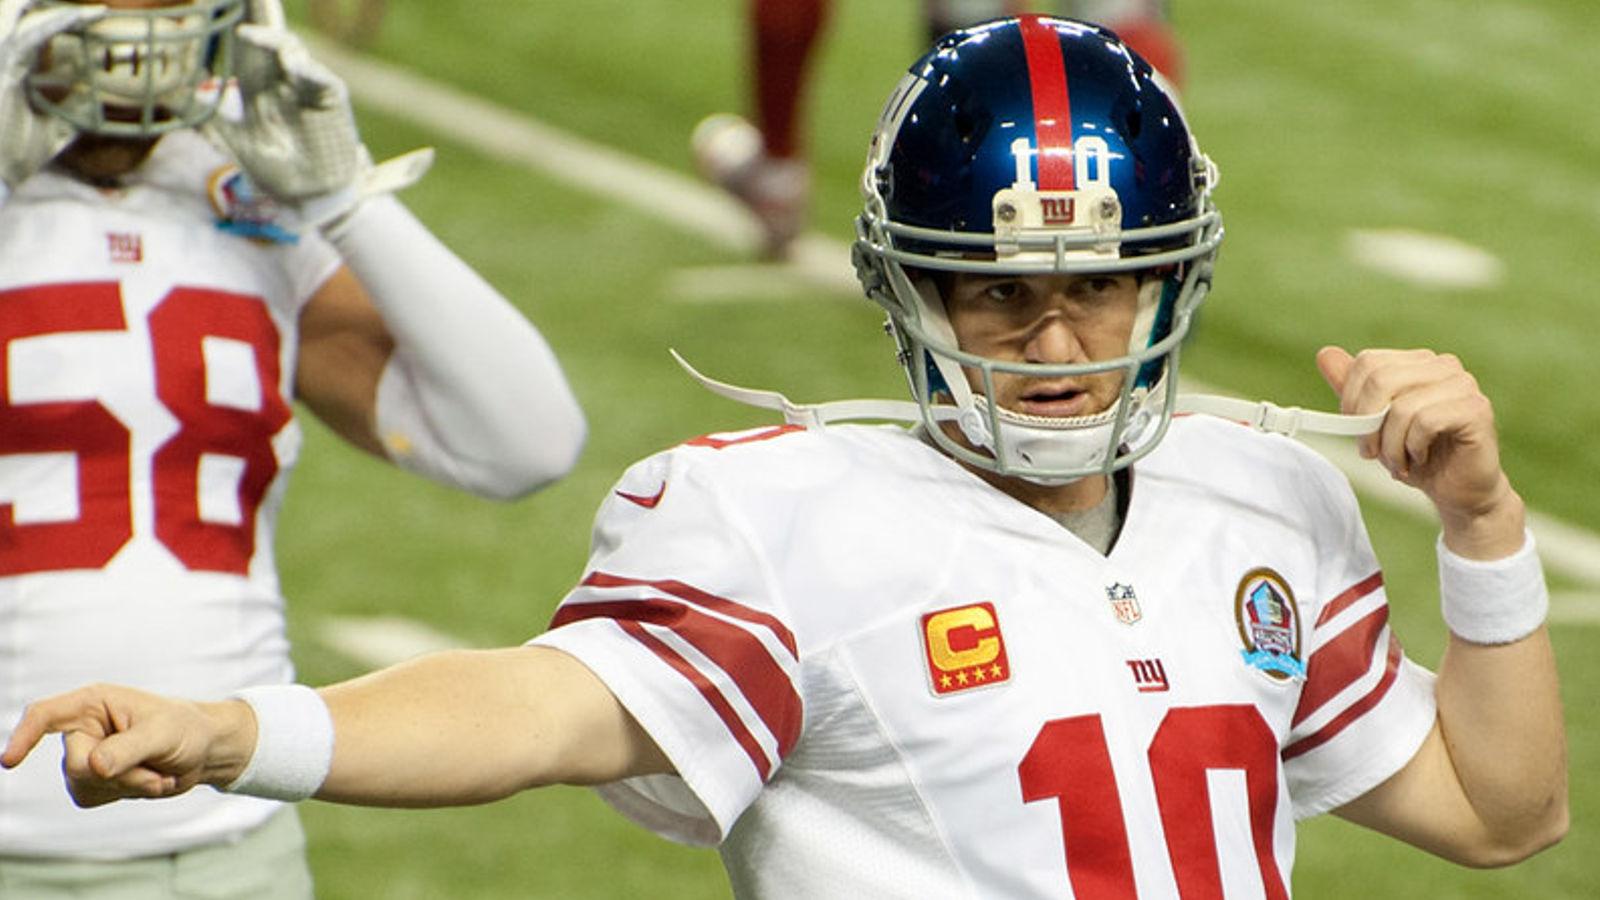 Former New York Giants quarterback Eli Manning